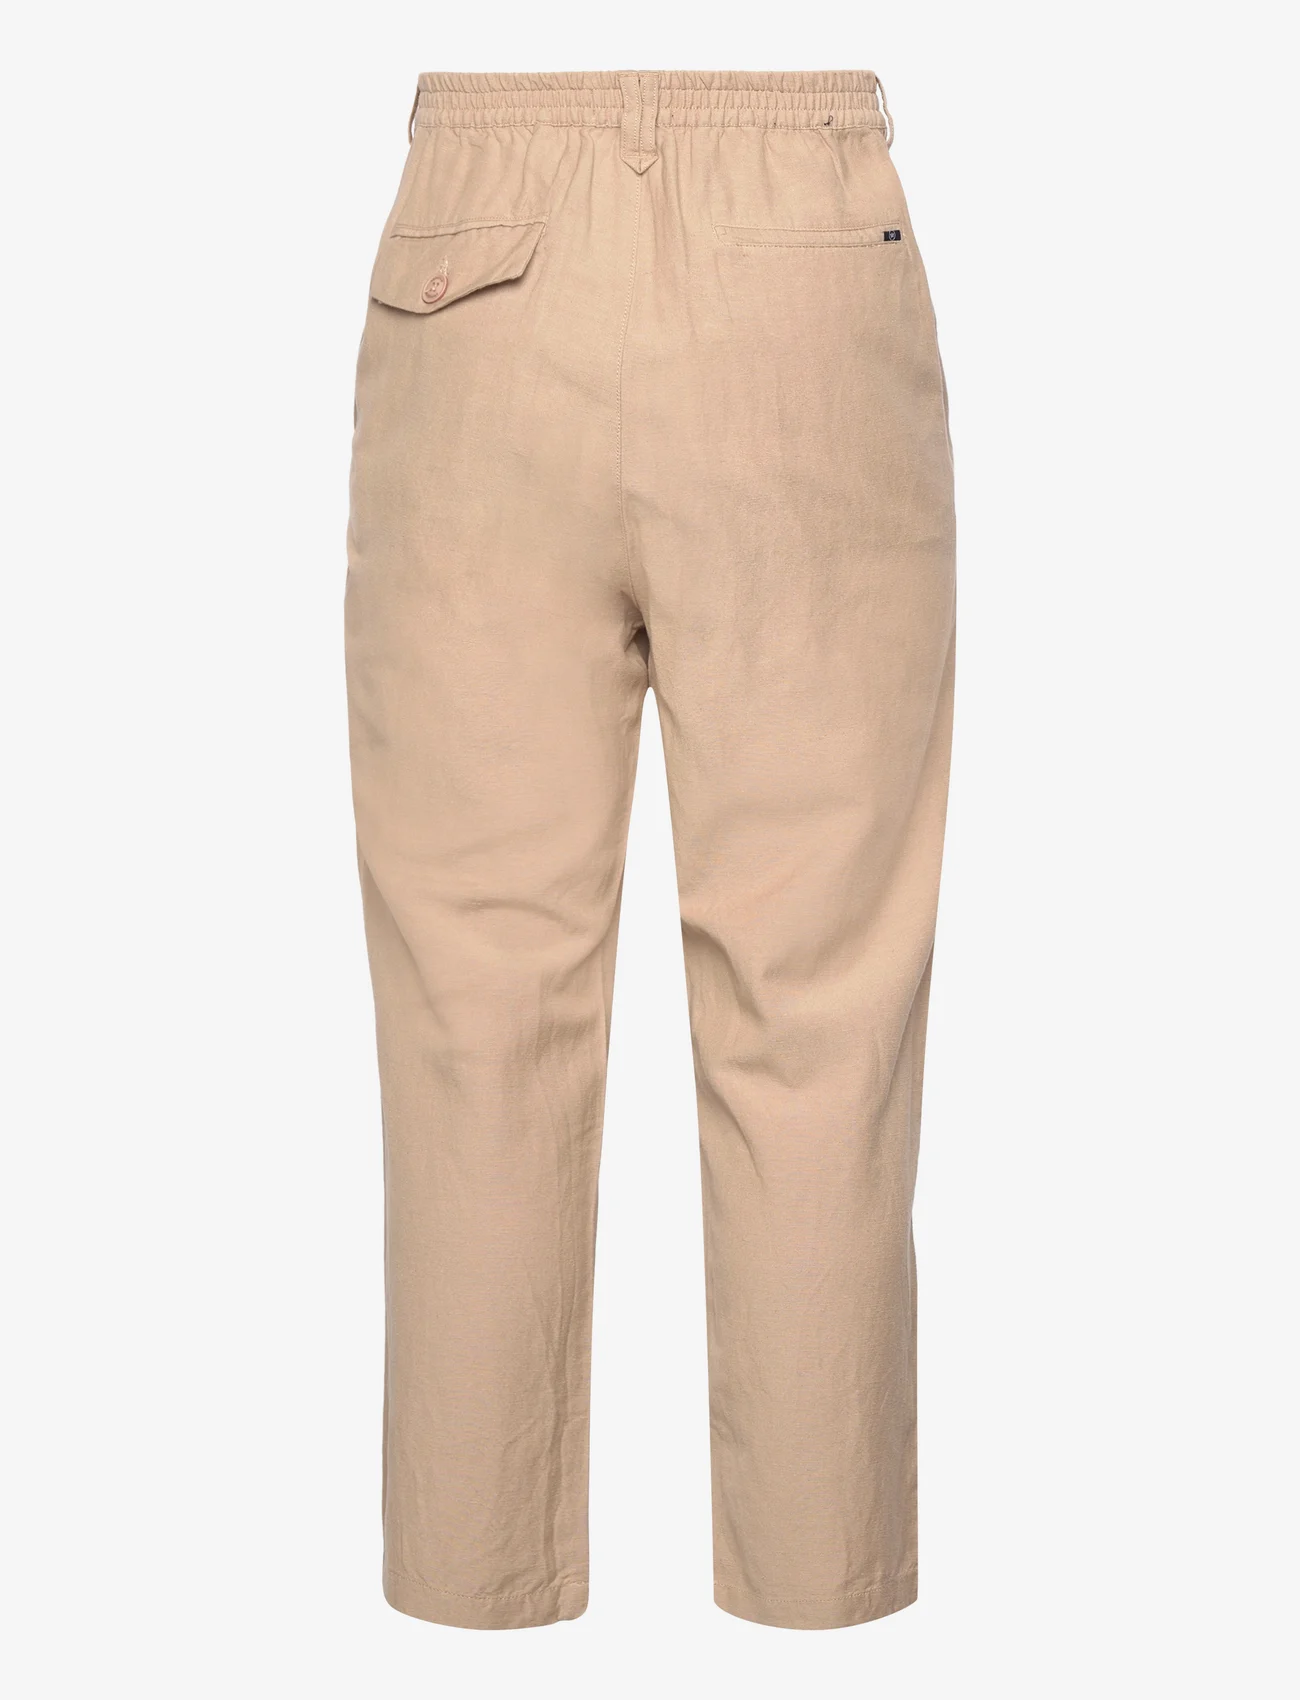 Kronstadt - Mason Linen pants - linen trousers - sand - 1